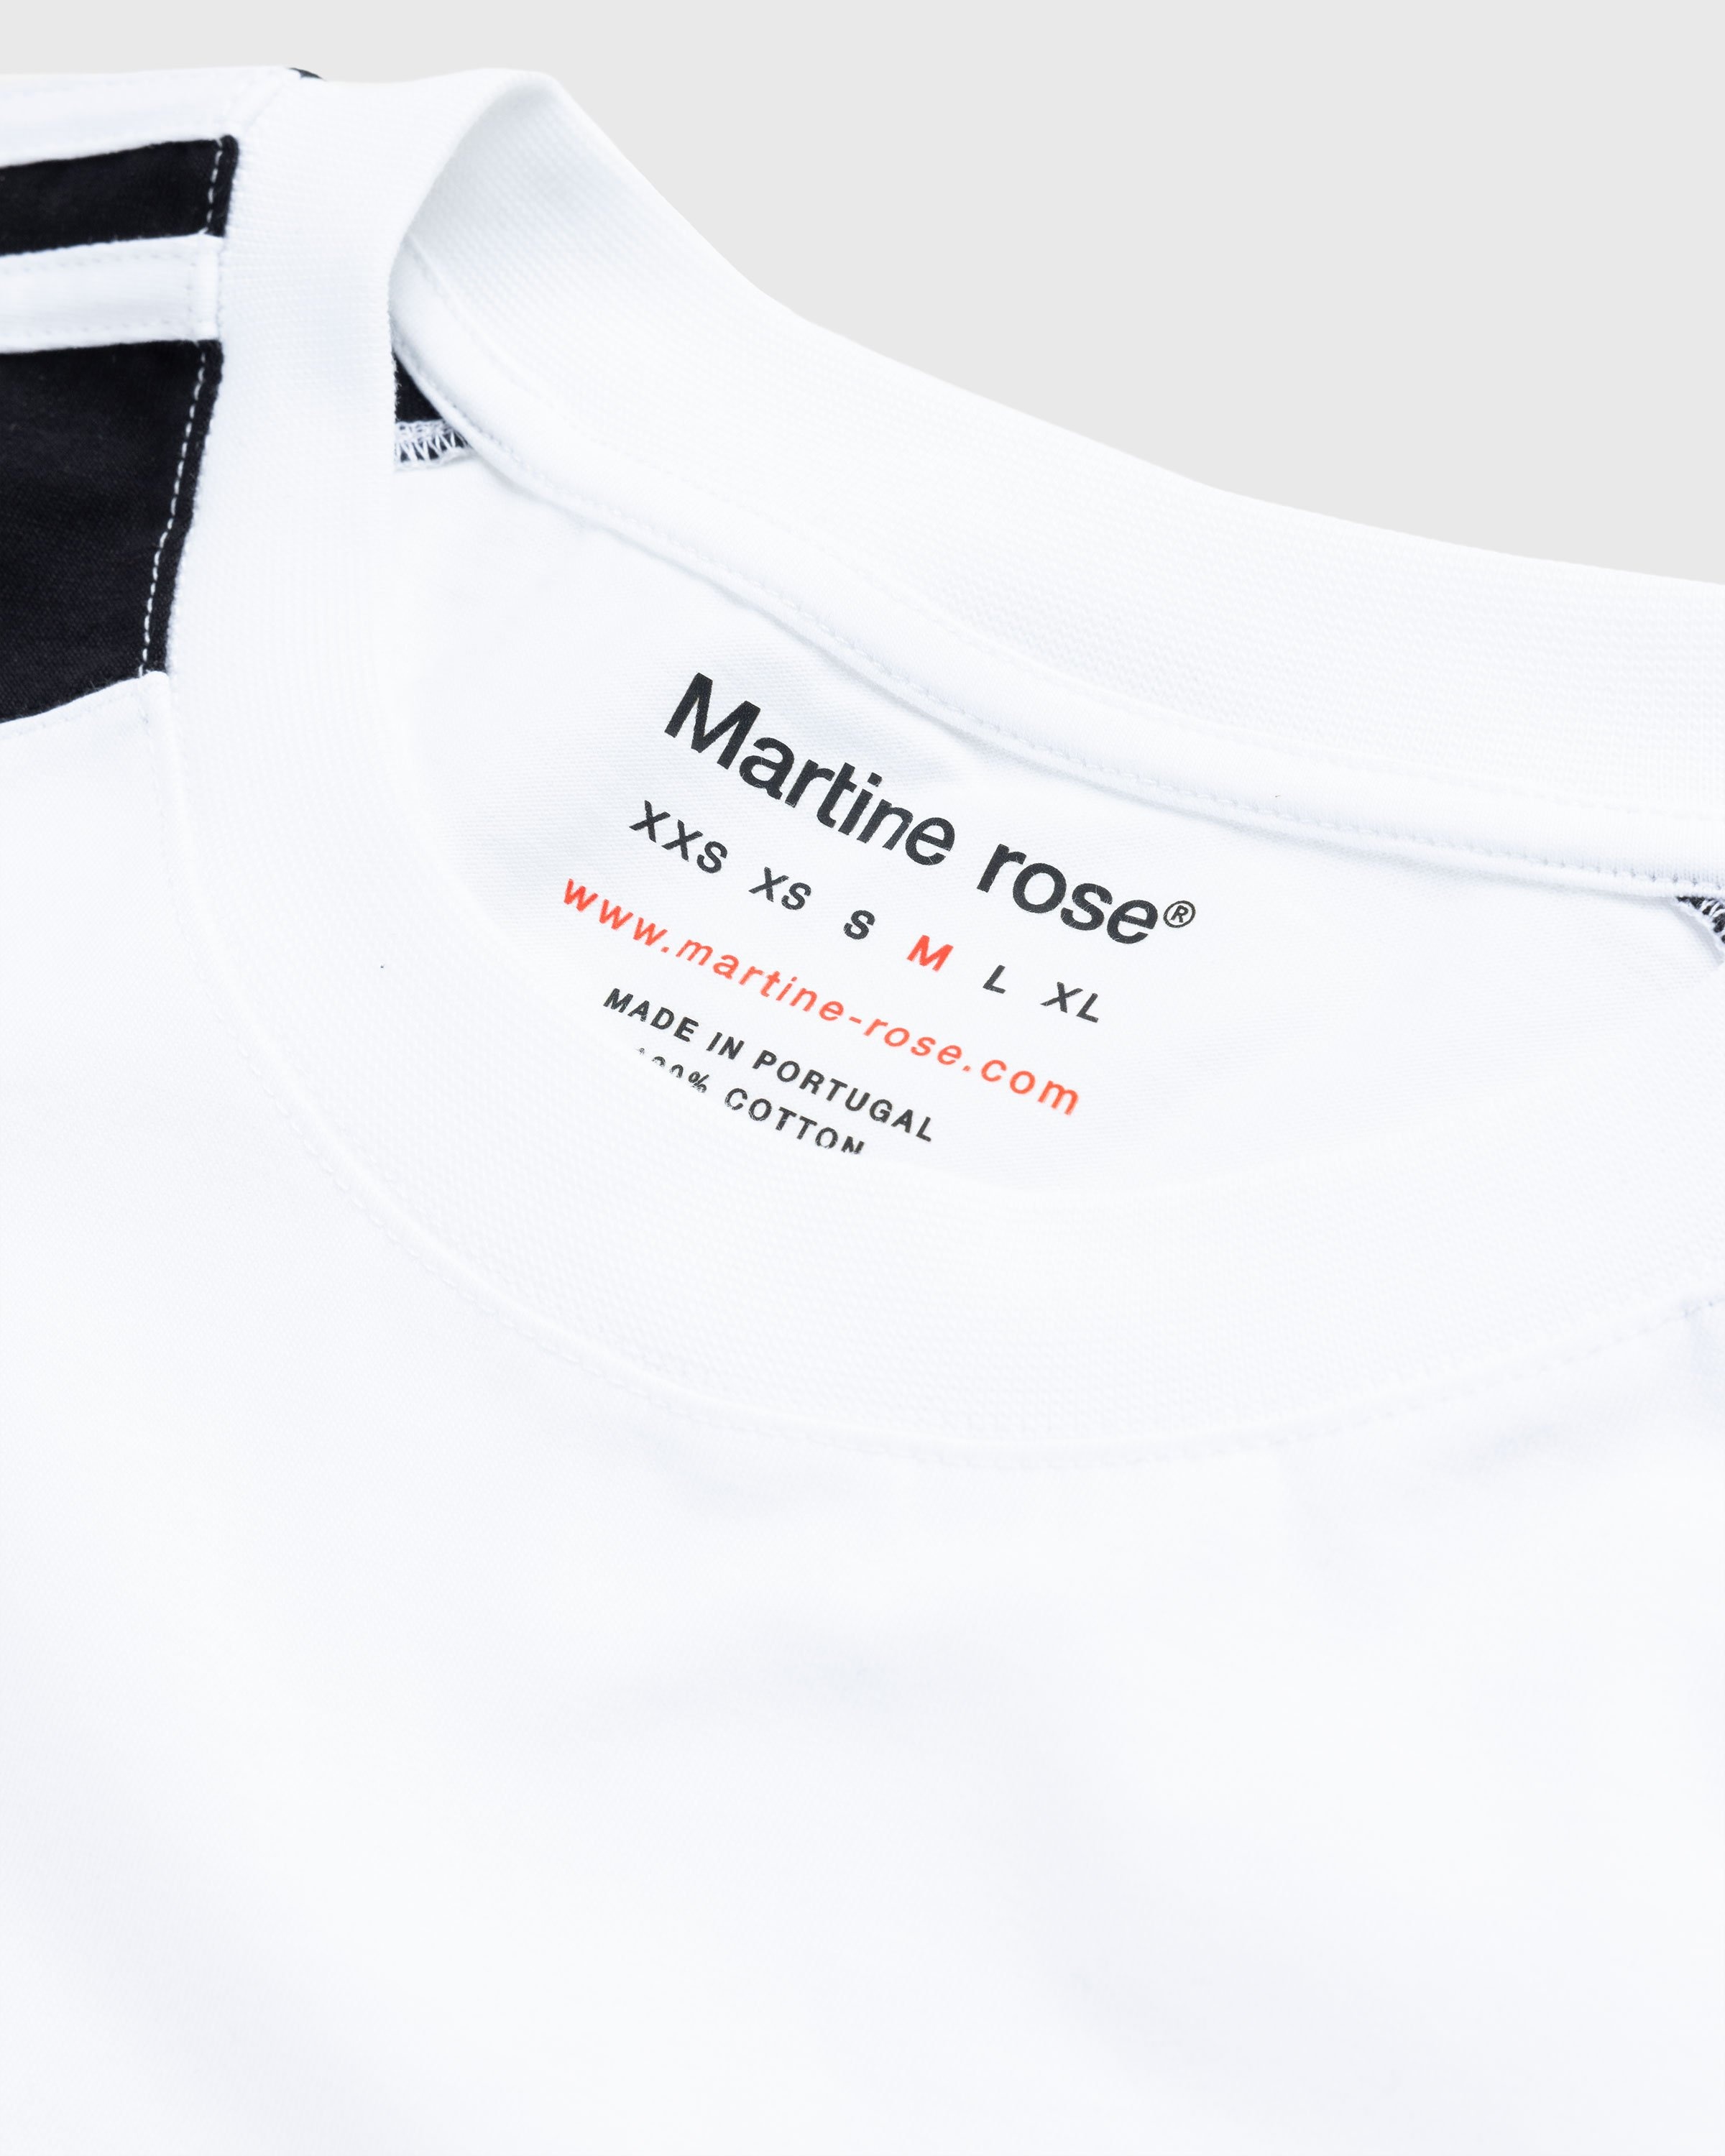 Fred Segal Martine Rose Panelled Oversized T-Shirt